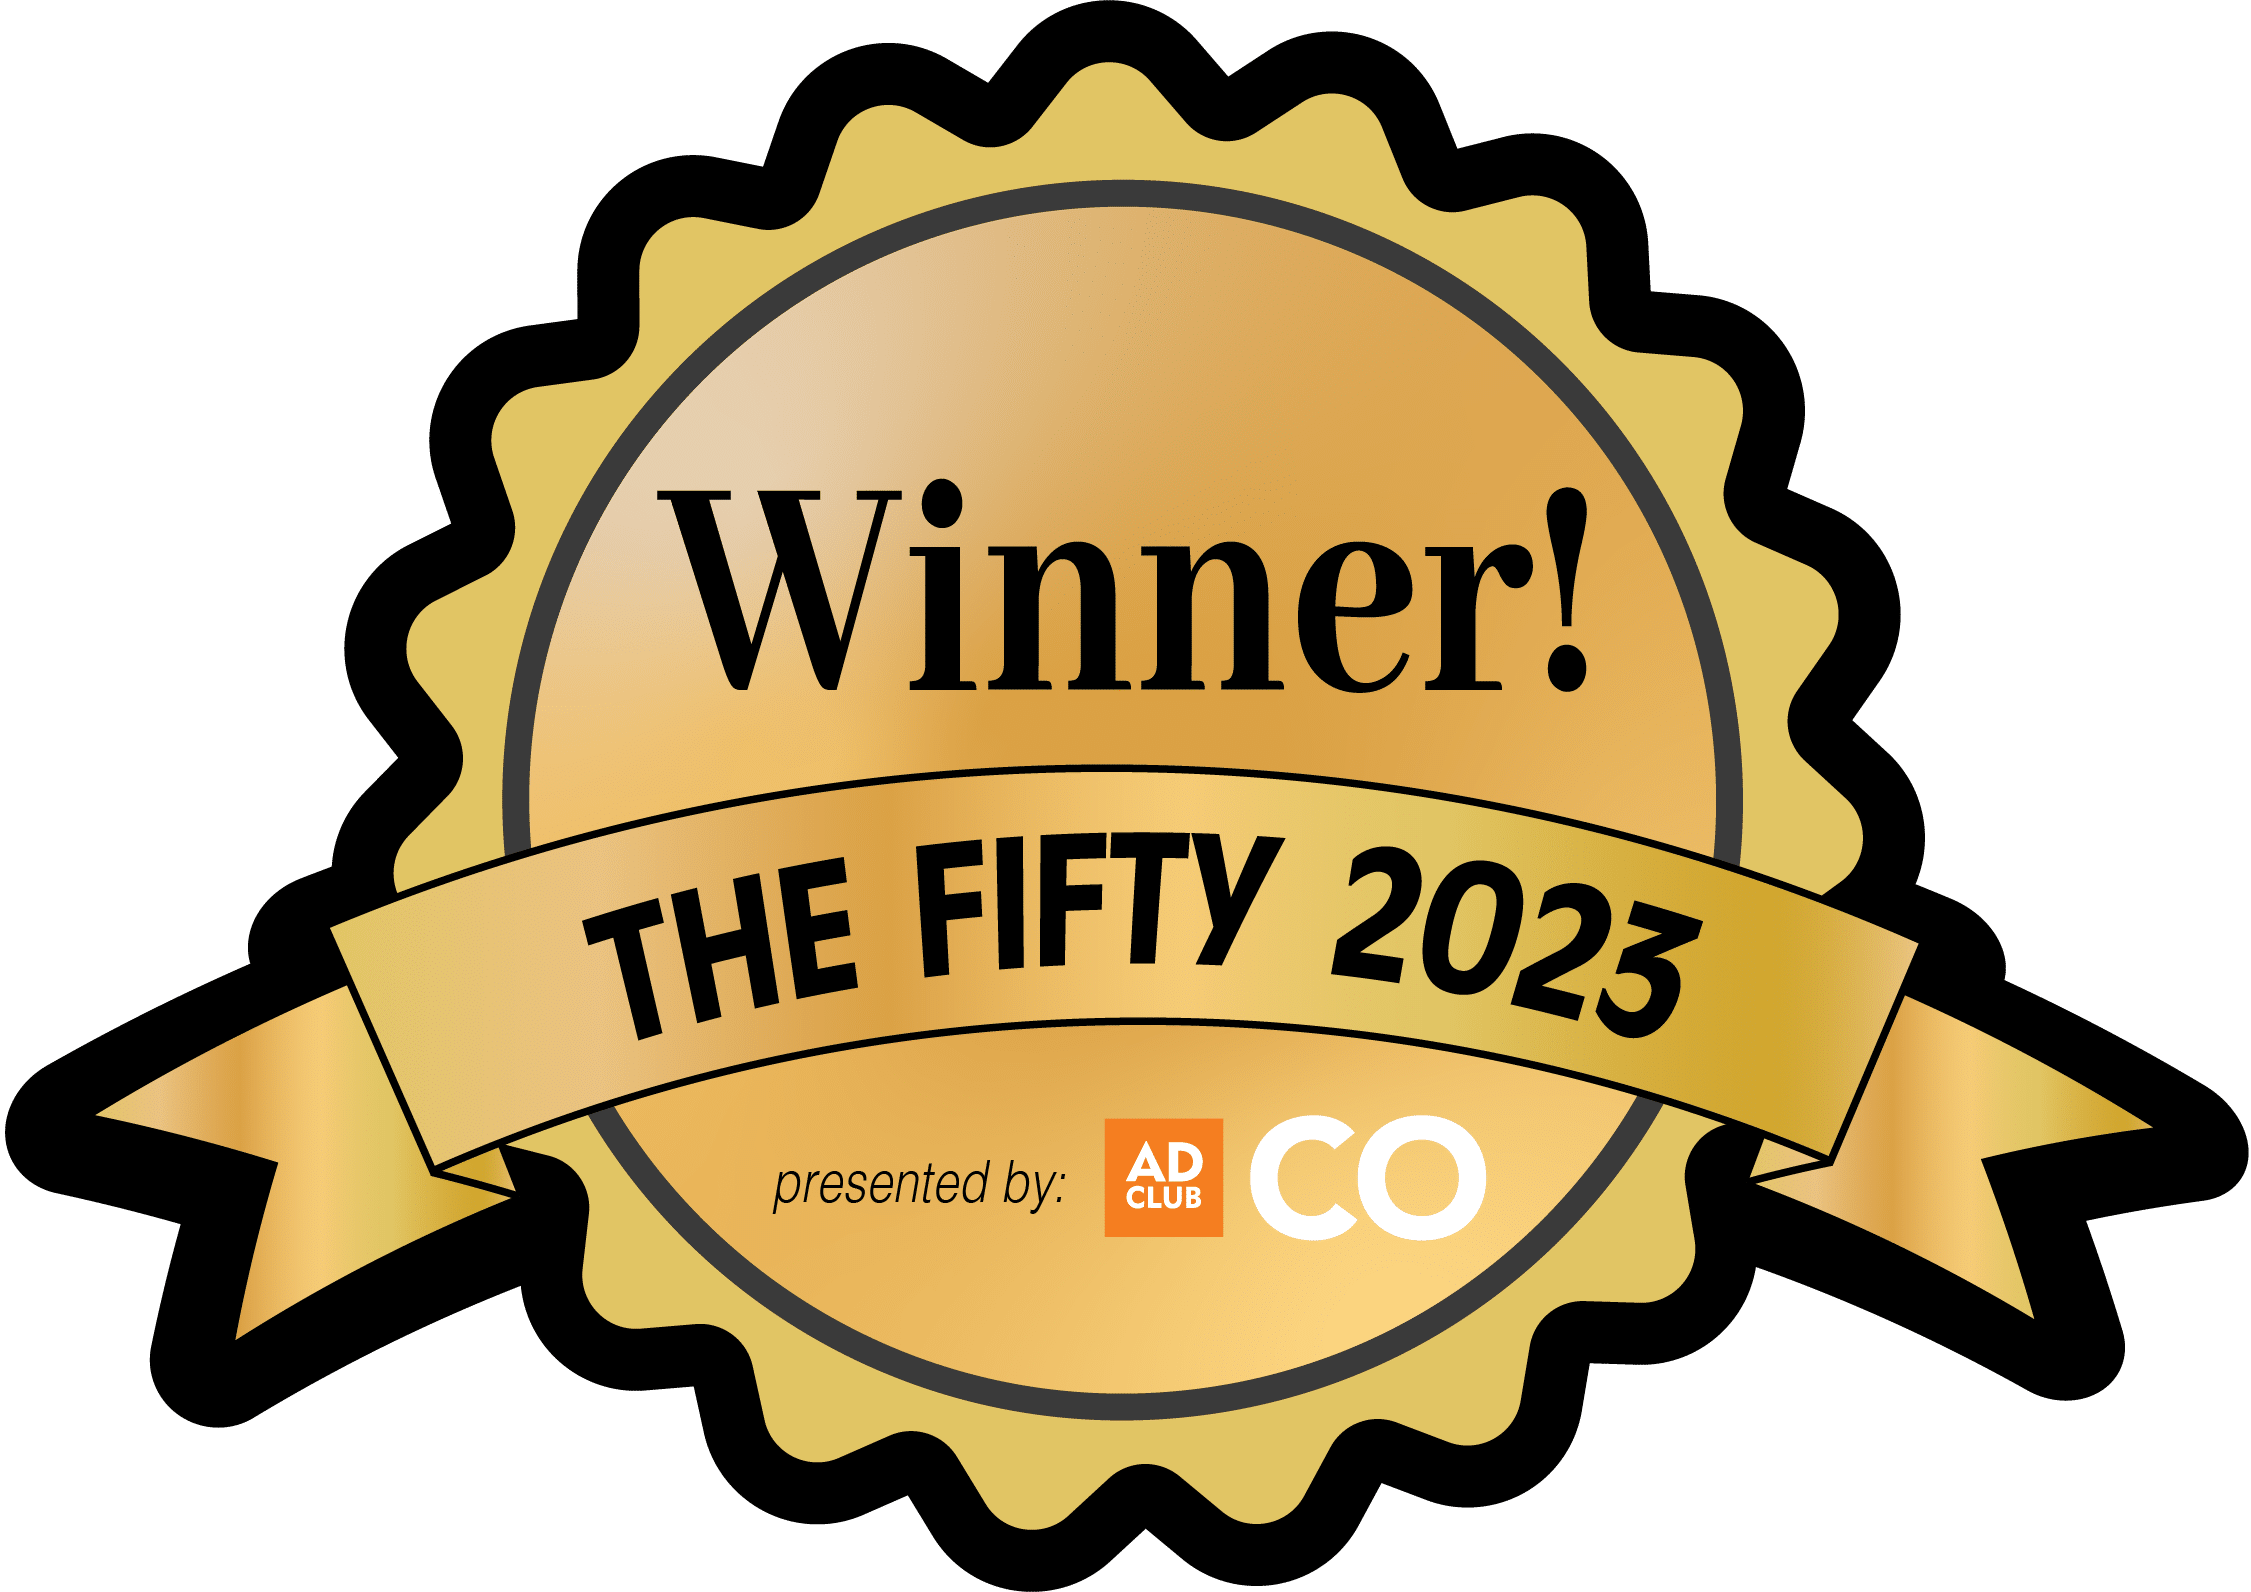 The Fifty 2023 Award